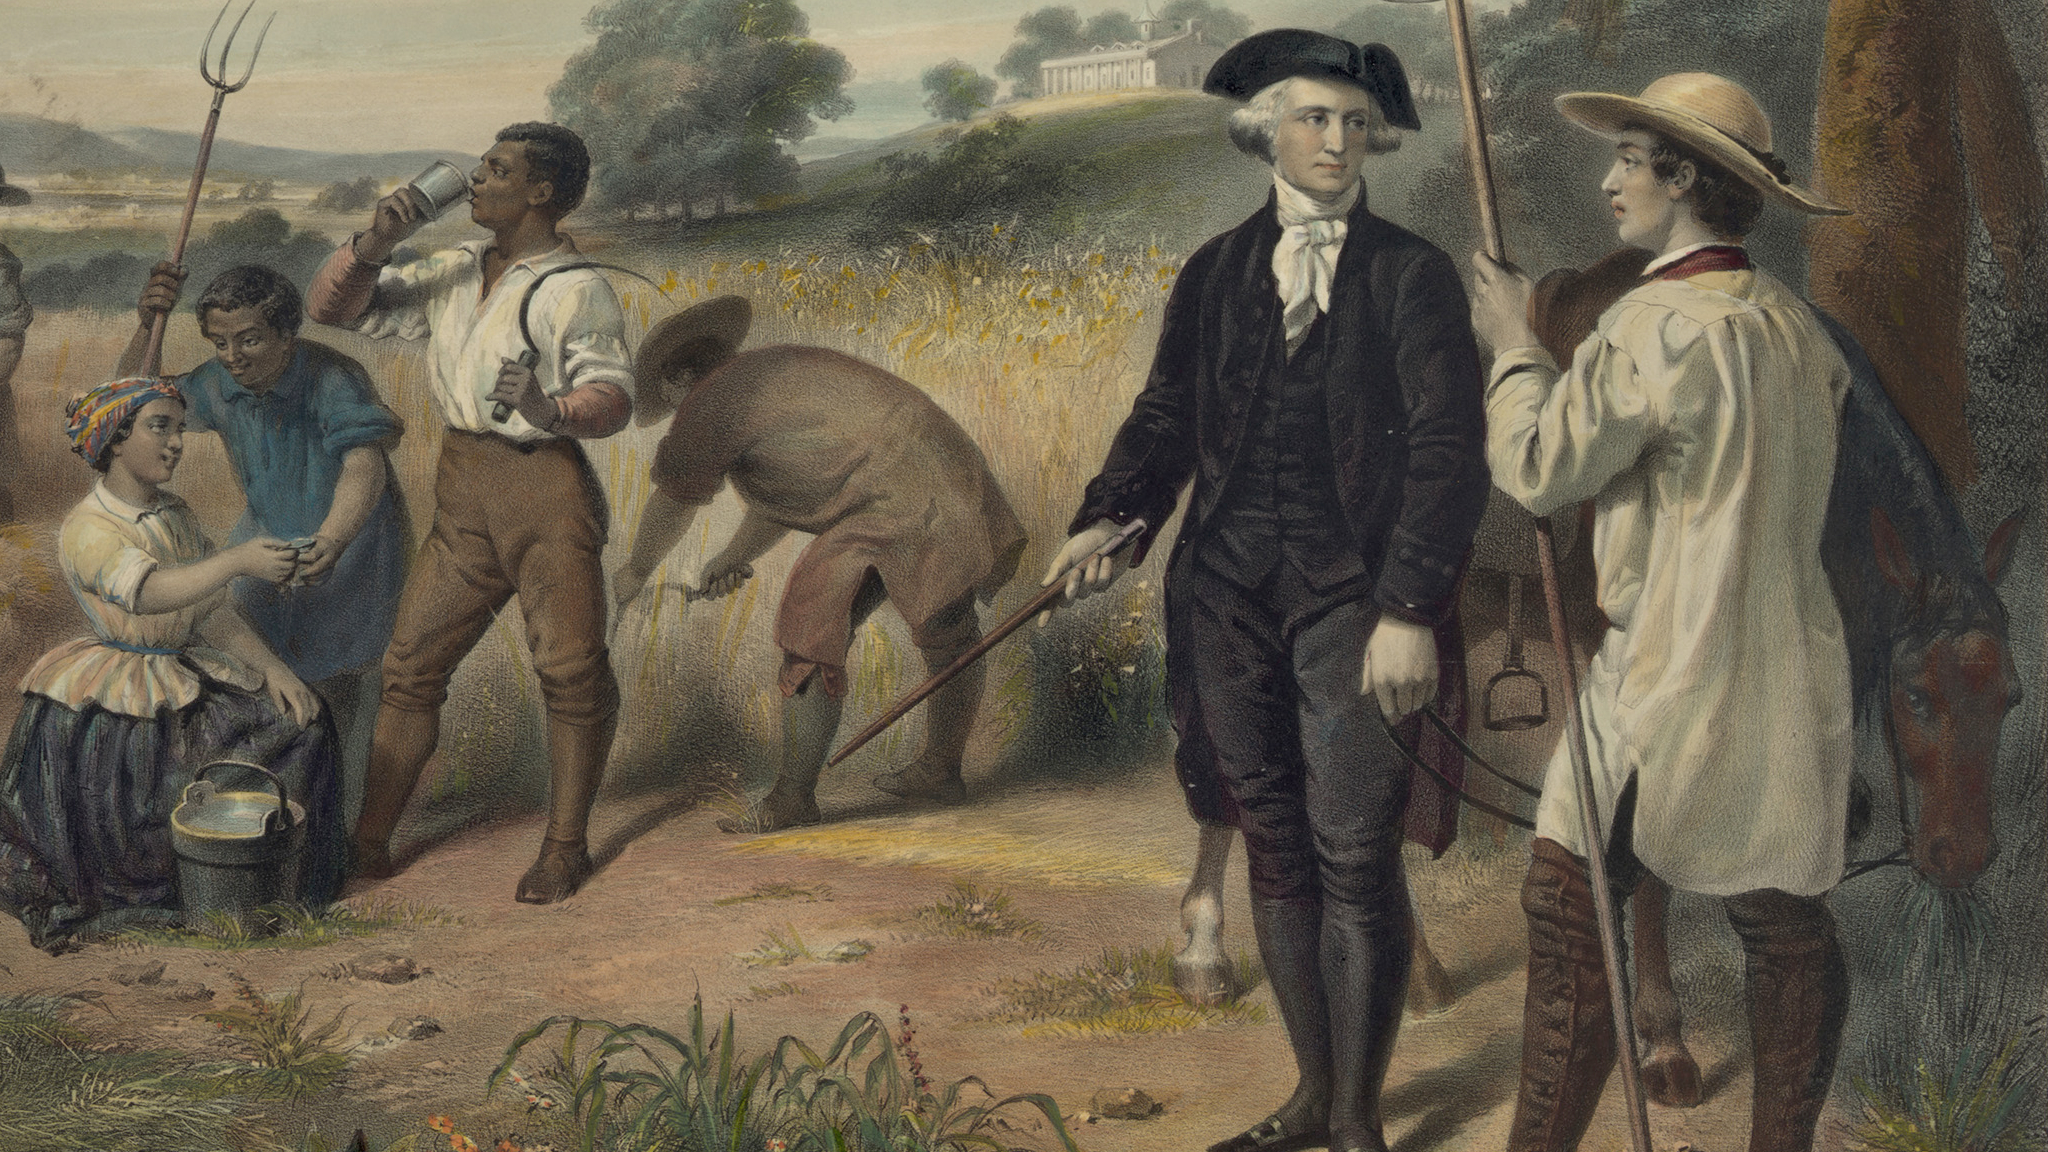 Read More: Did Washington Really Free Mount Vernon’s Slaves?